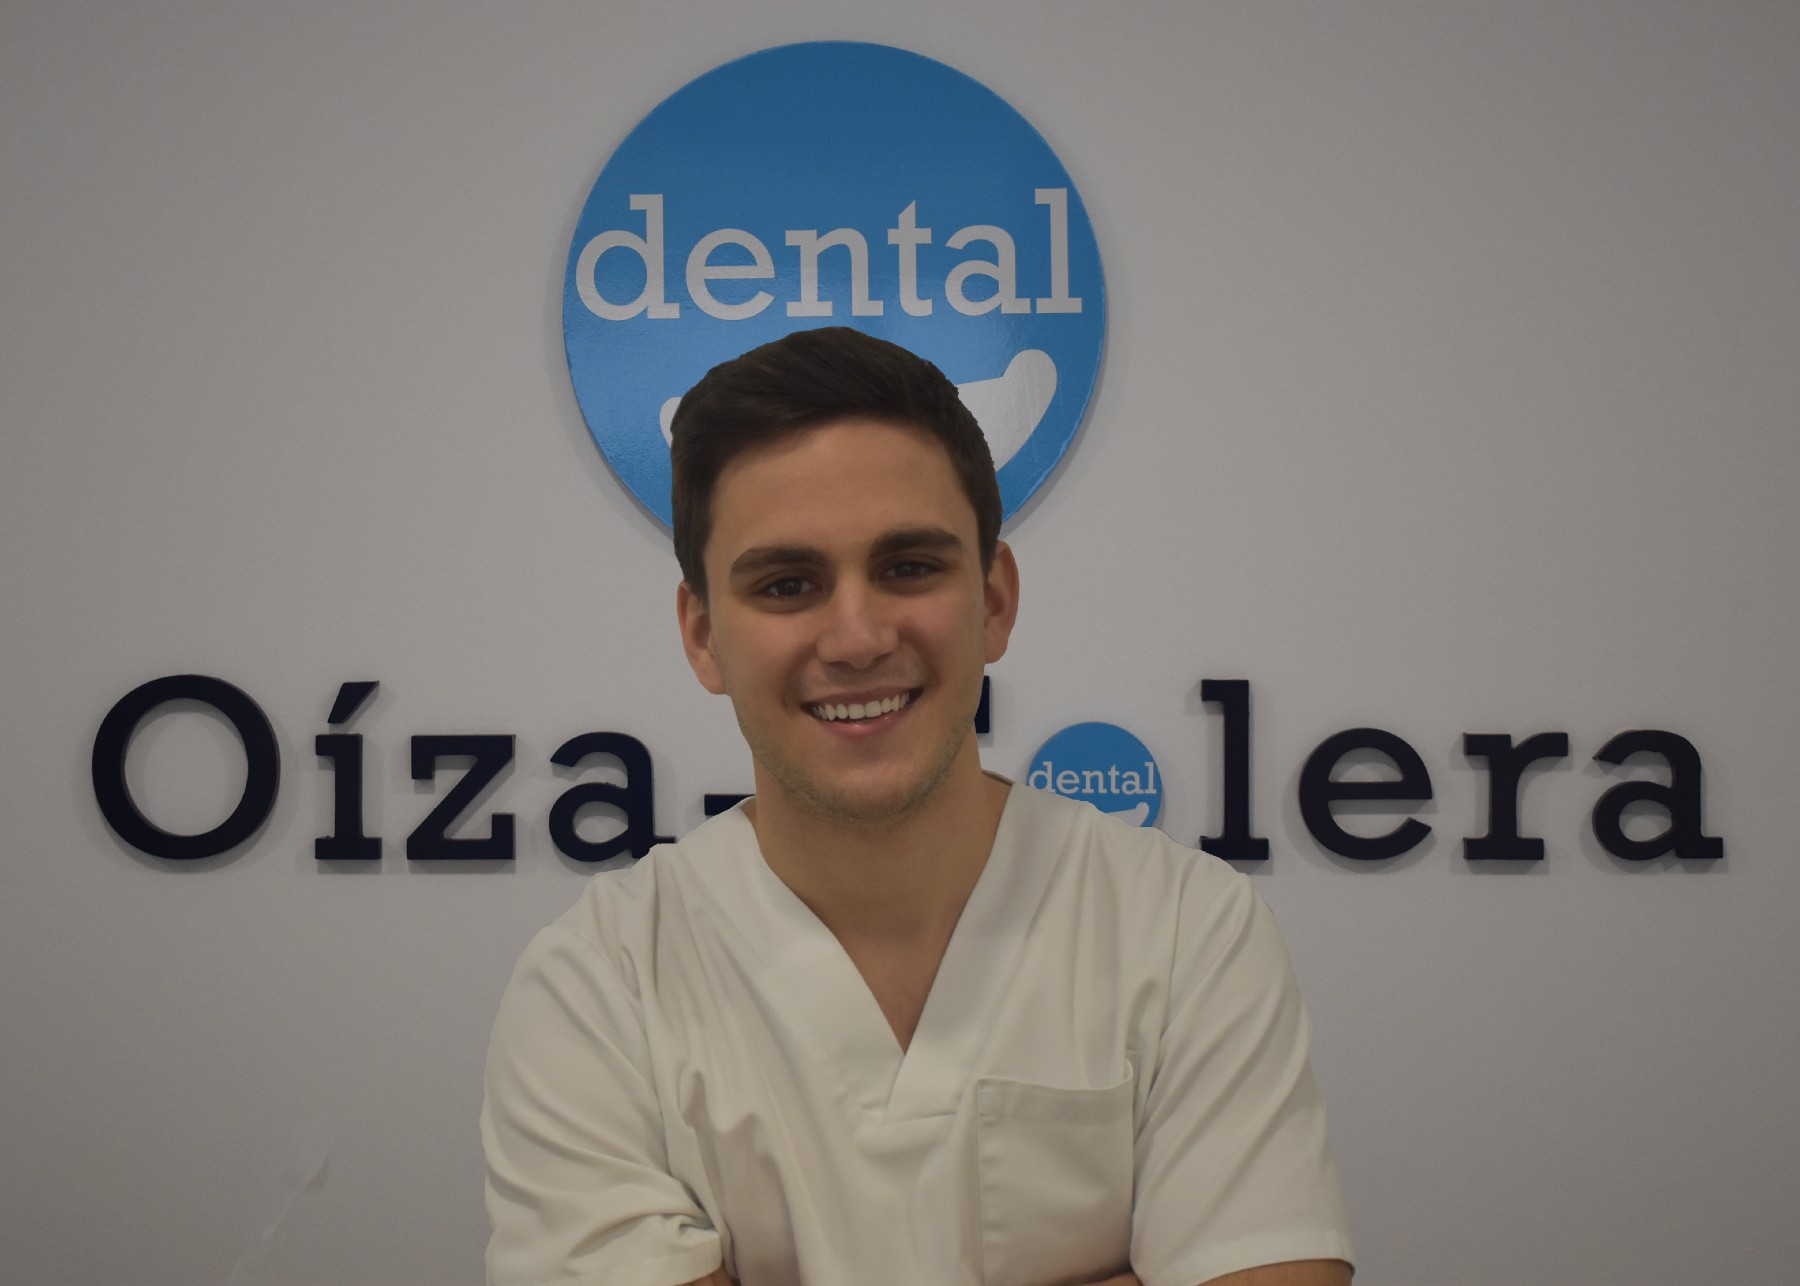 Roberto of Oíza-Colera Dental Clinic